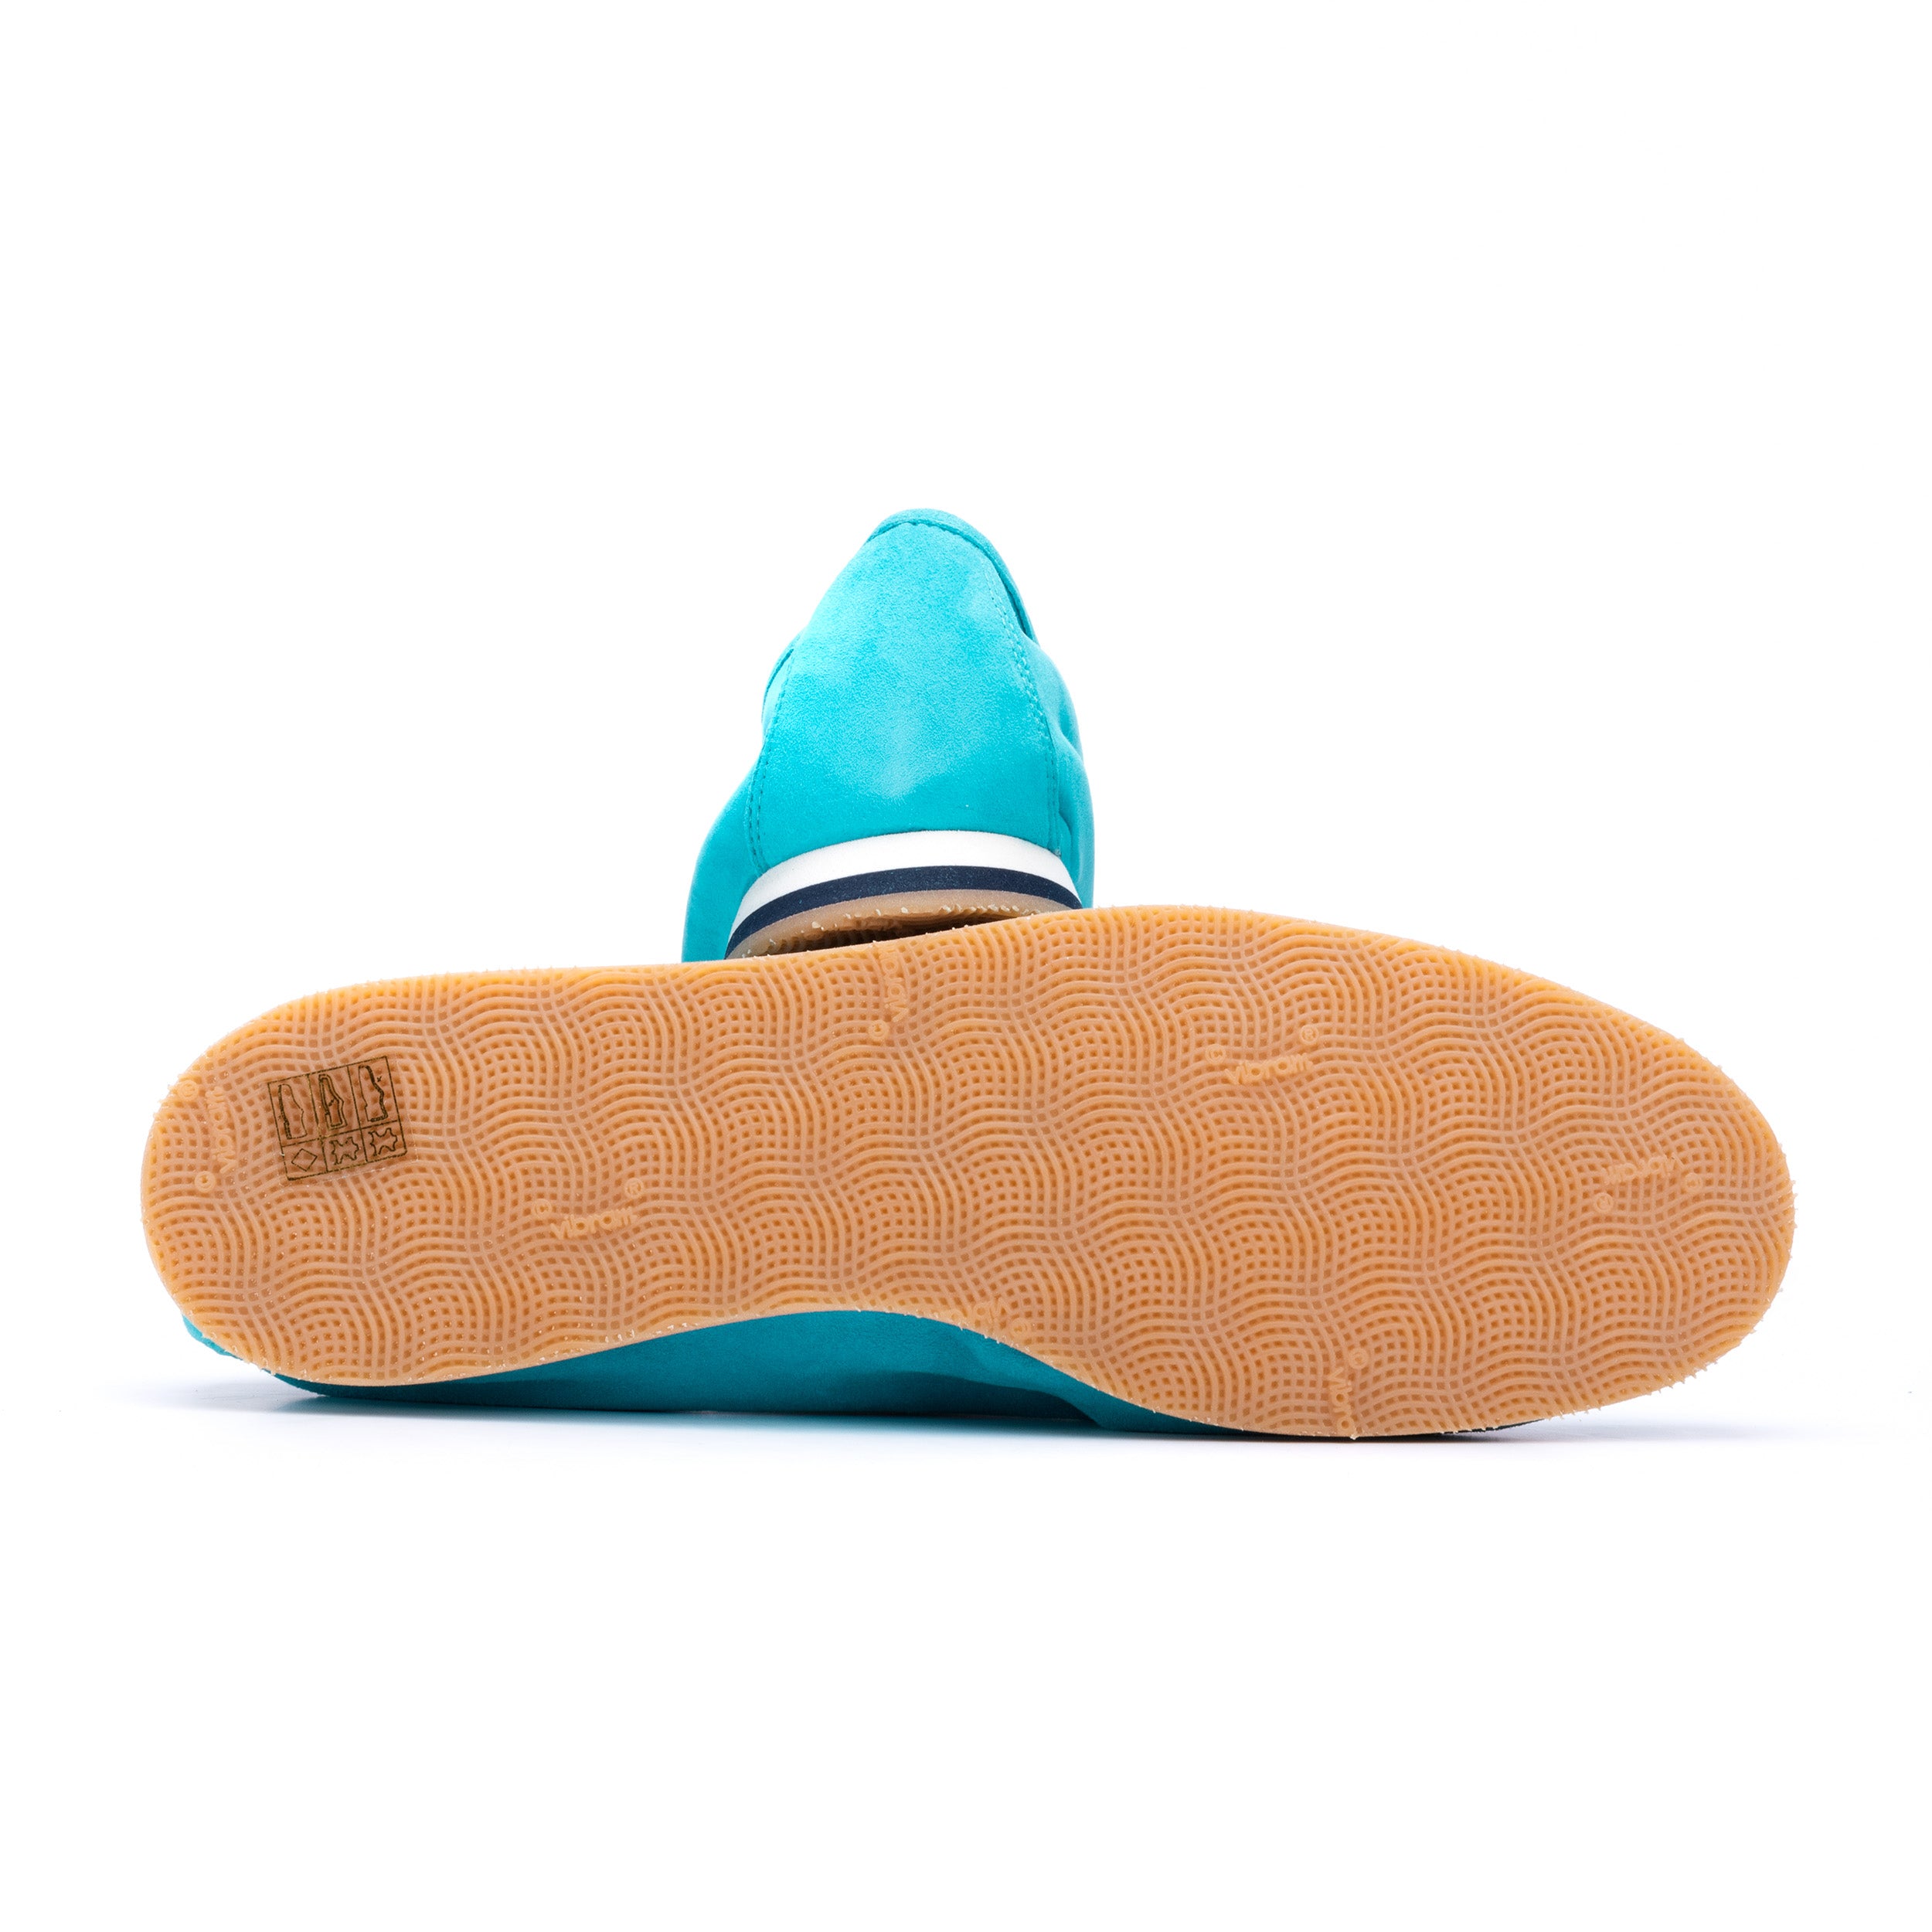 "Capri" Turquoise Suede Penny Loafer Shoes Vibram Sole EU – SARTORIALE